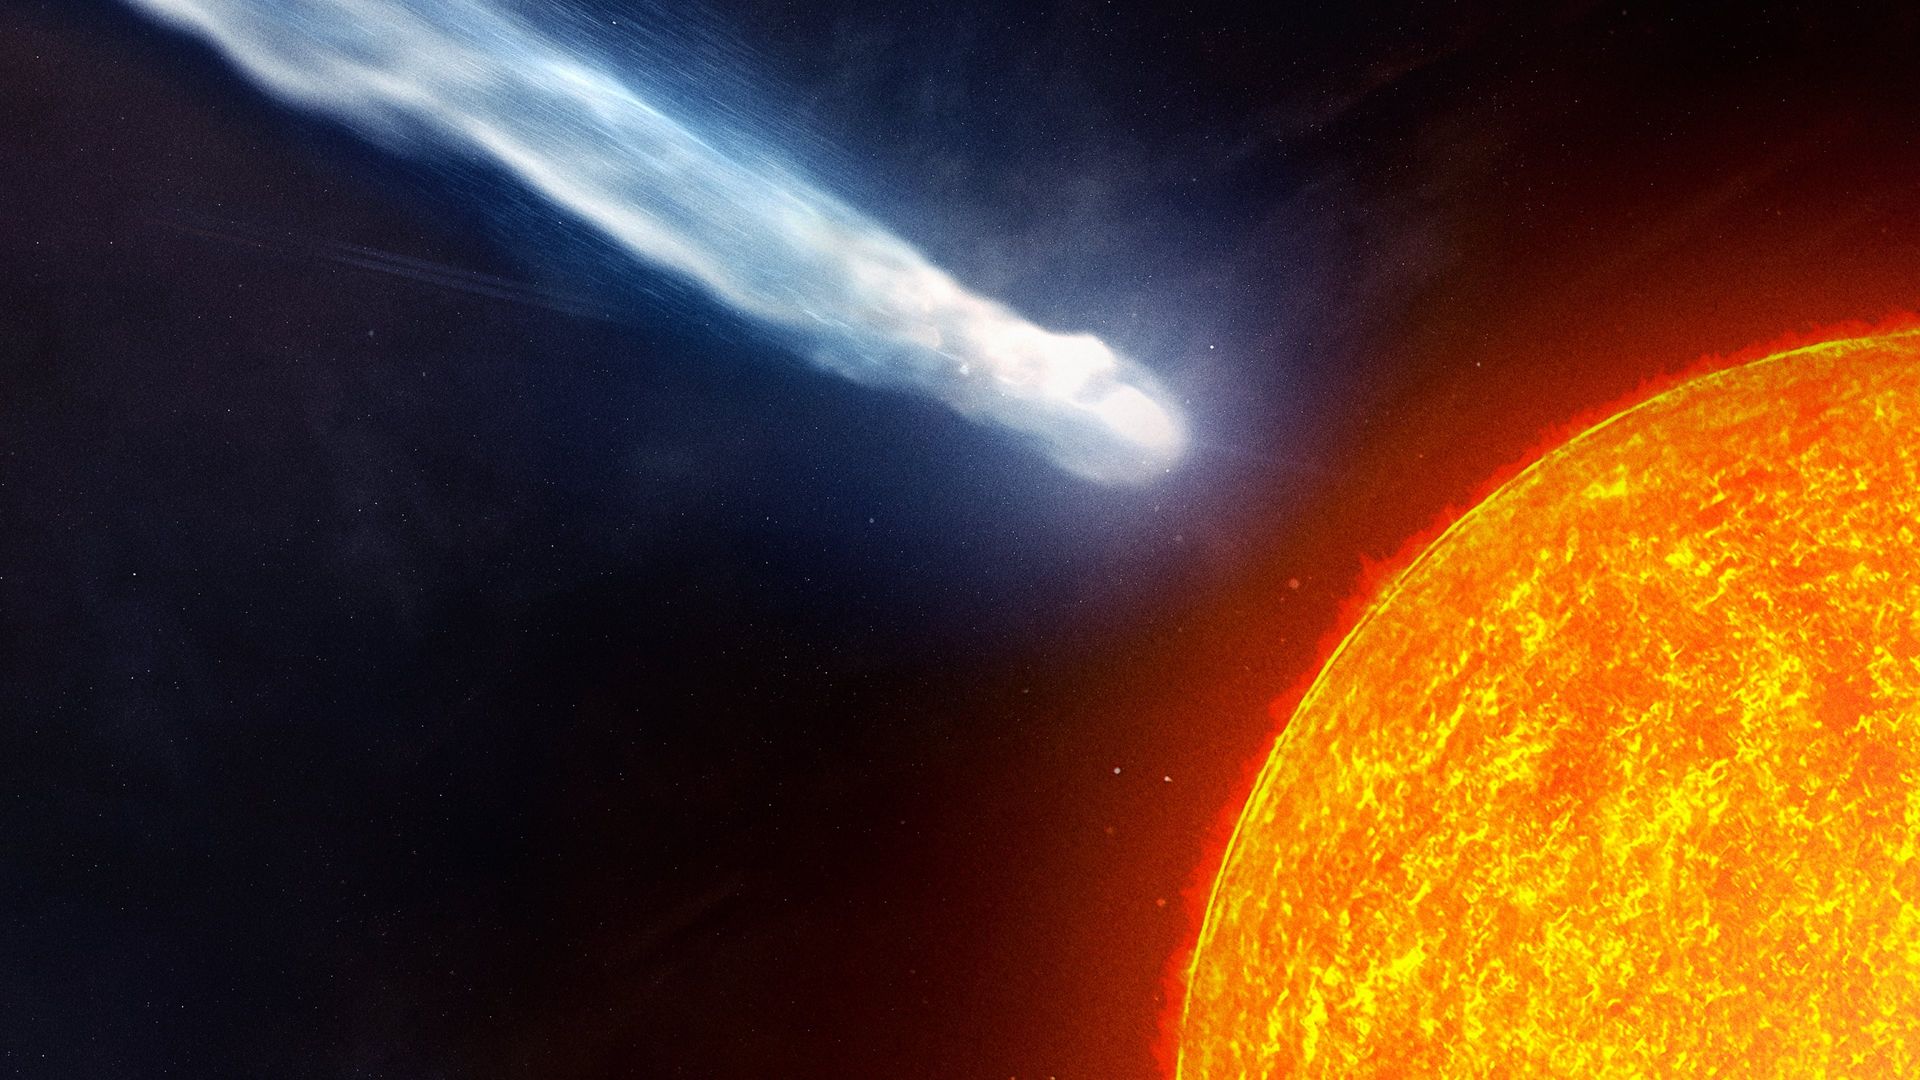 Comet Encounter background